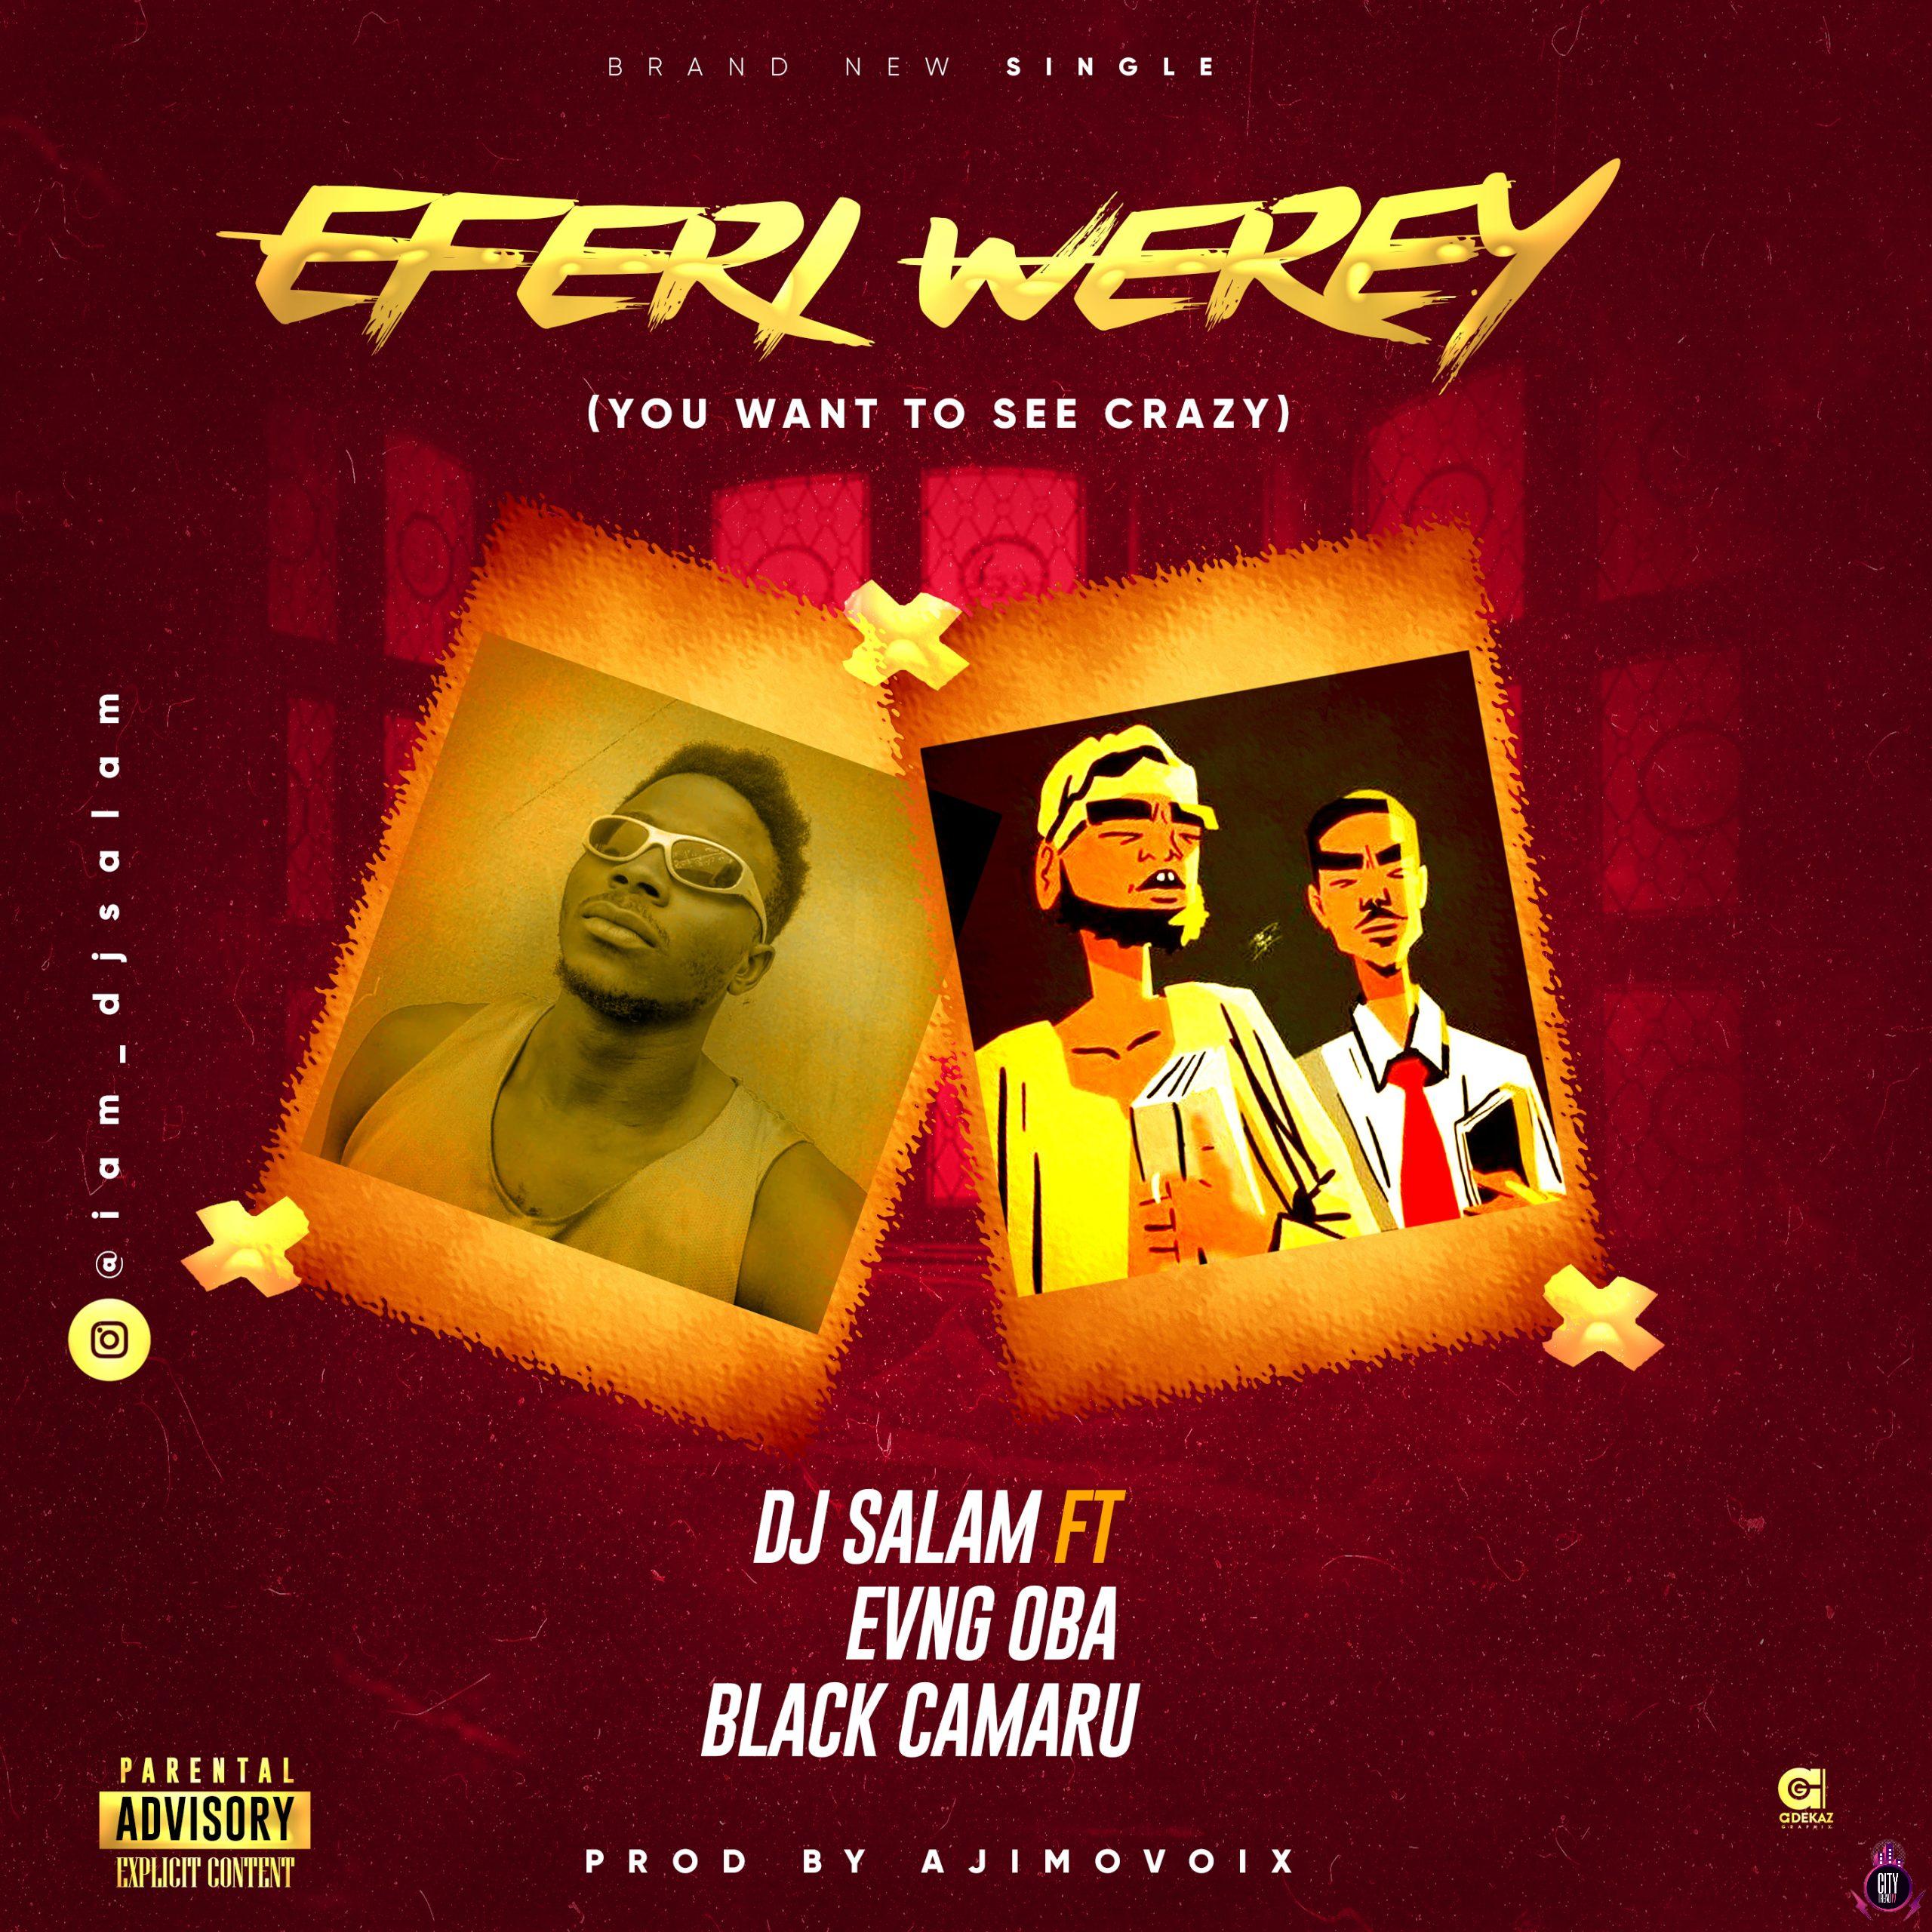 DJ Salam ft. Evang Oba Black Camaru — Eferi Werey scaled